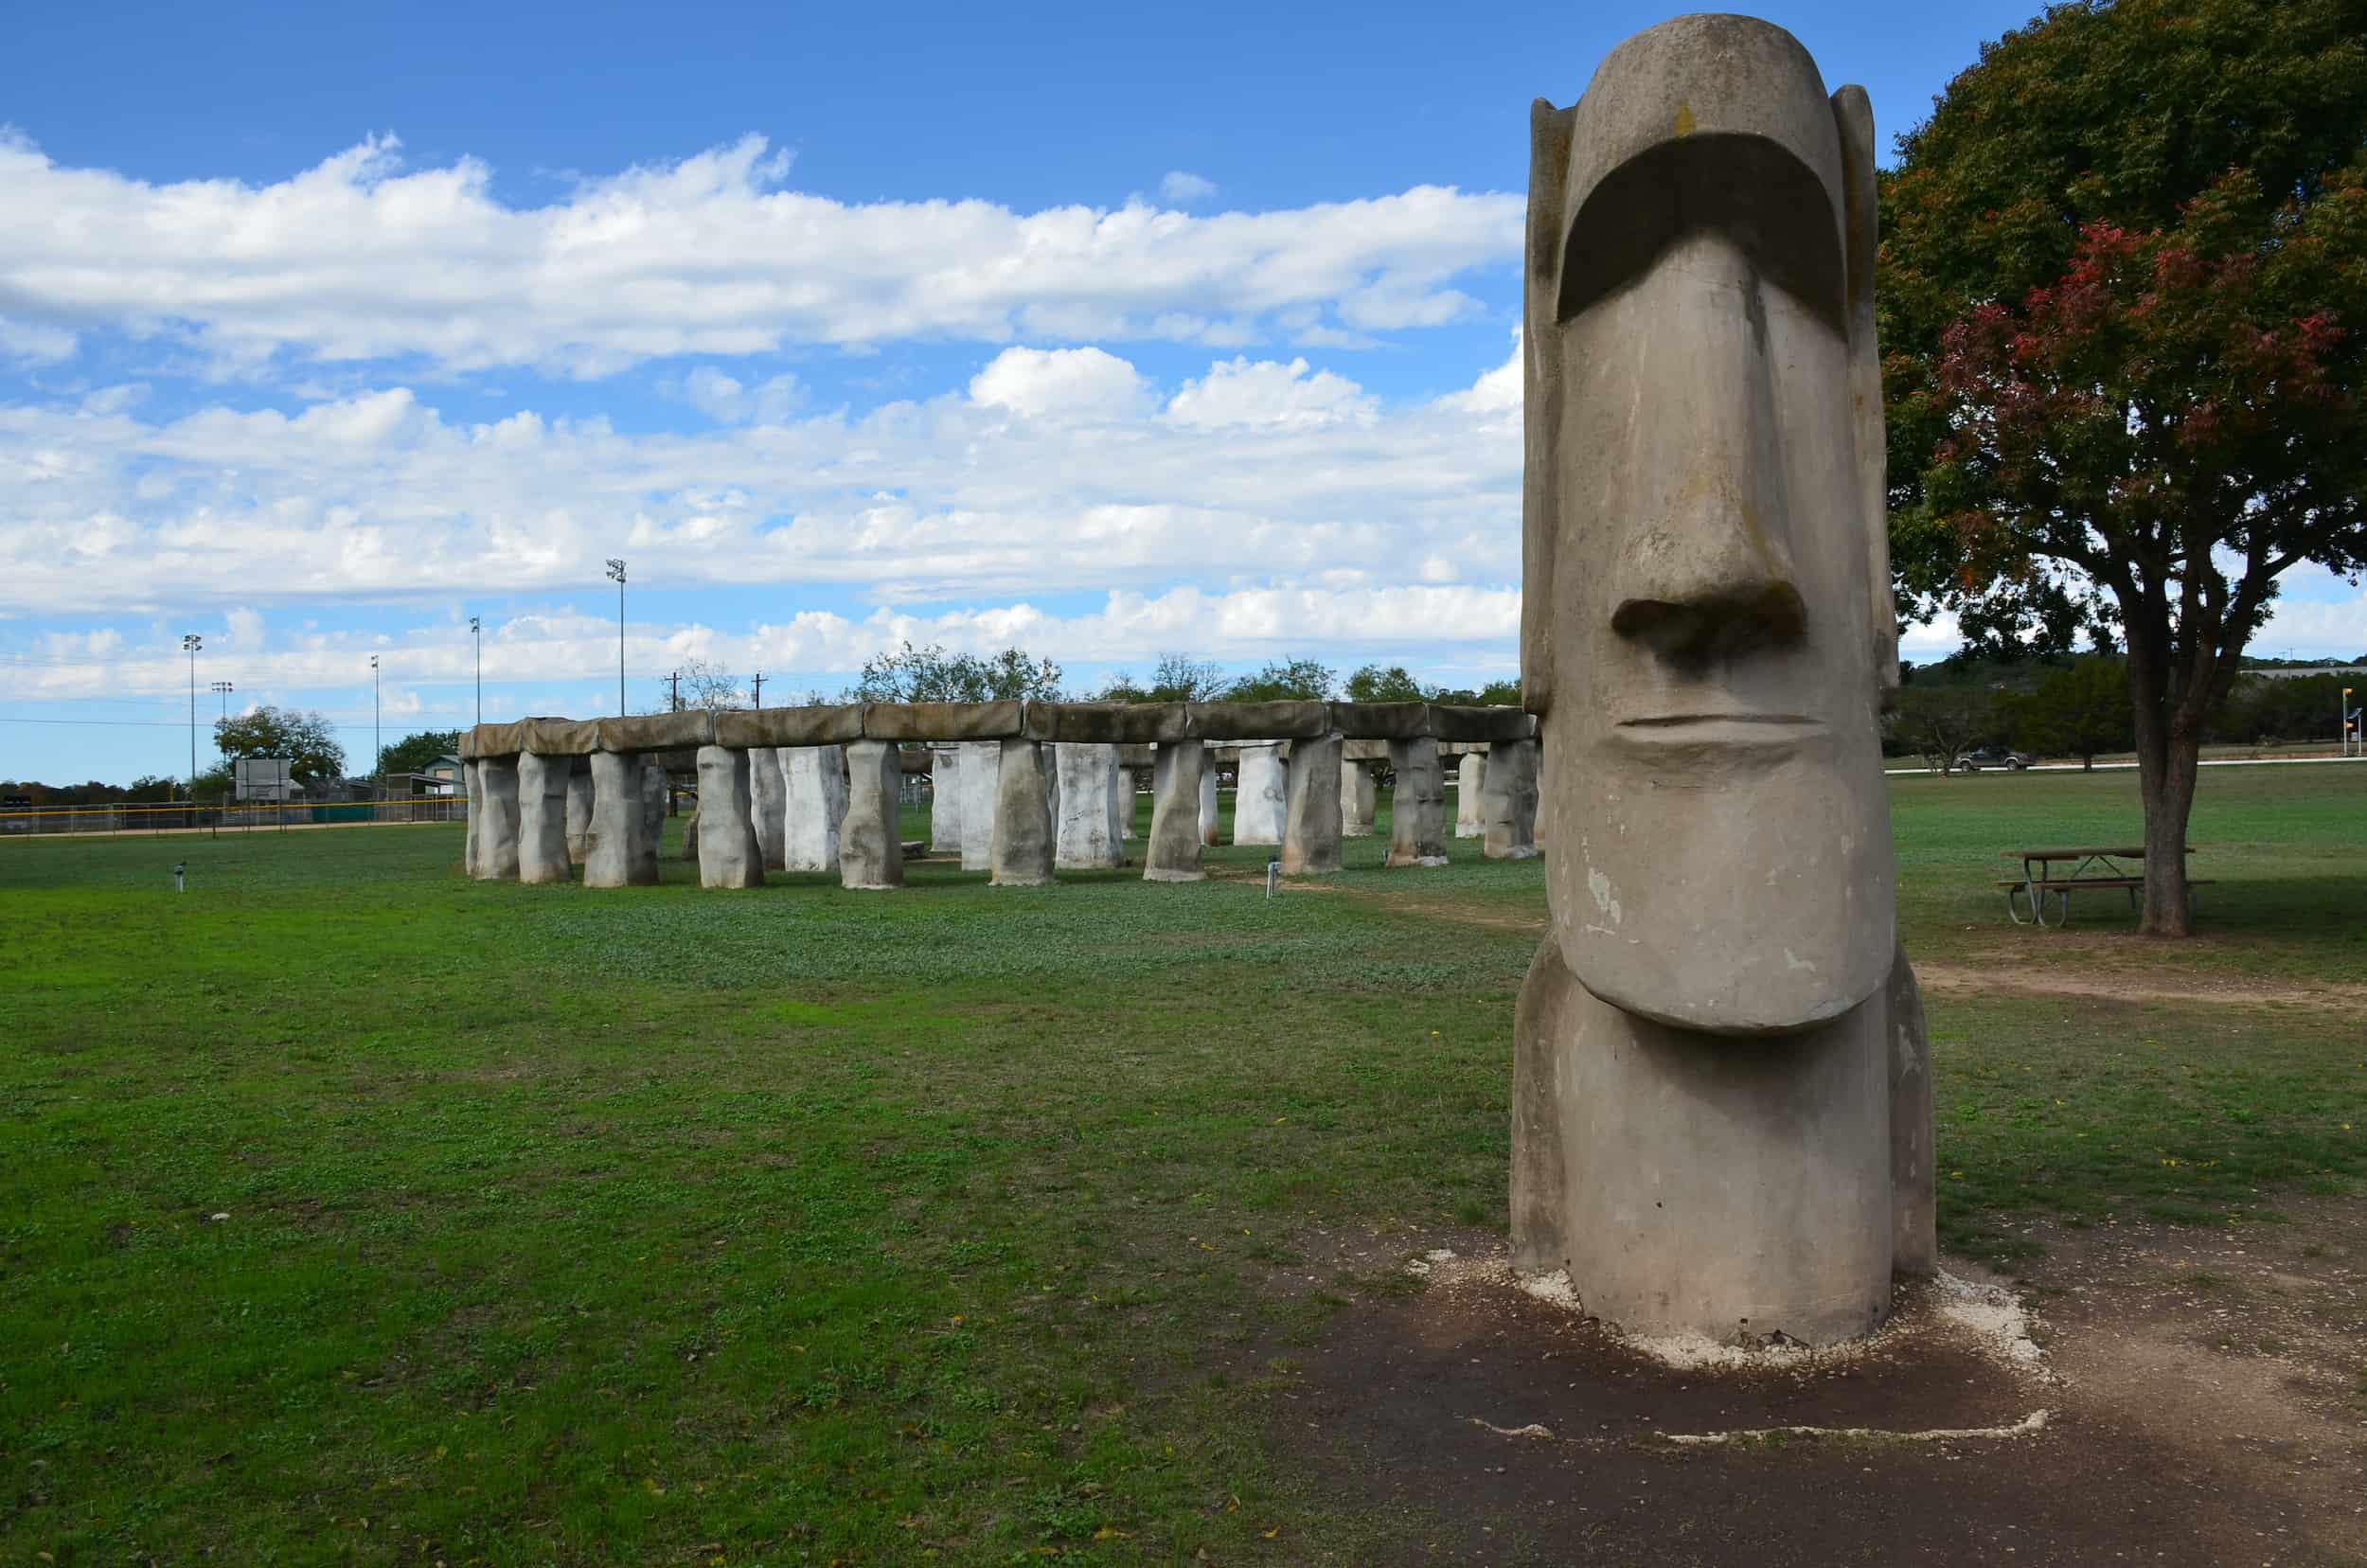 Moai statue in Ingram, Texas